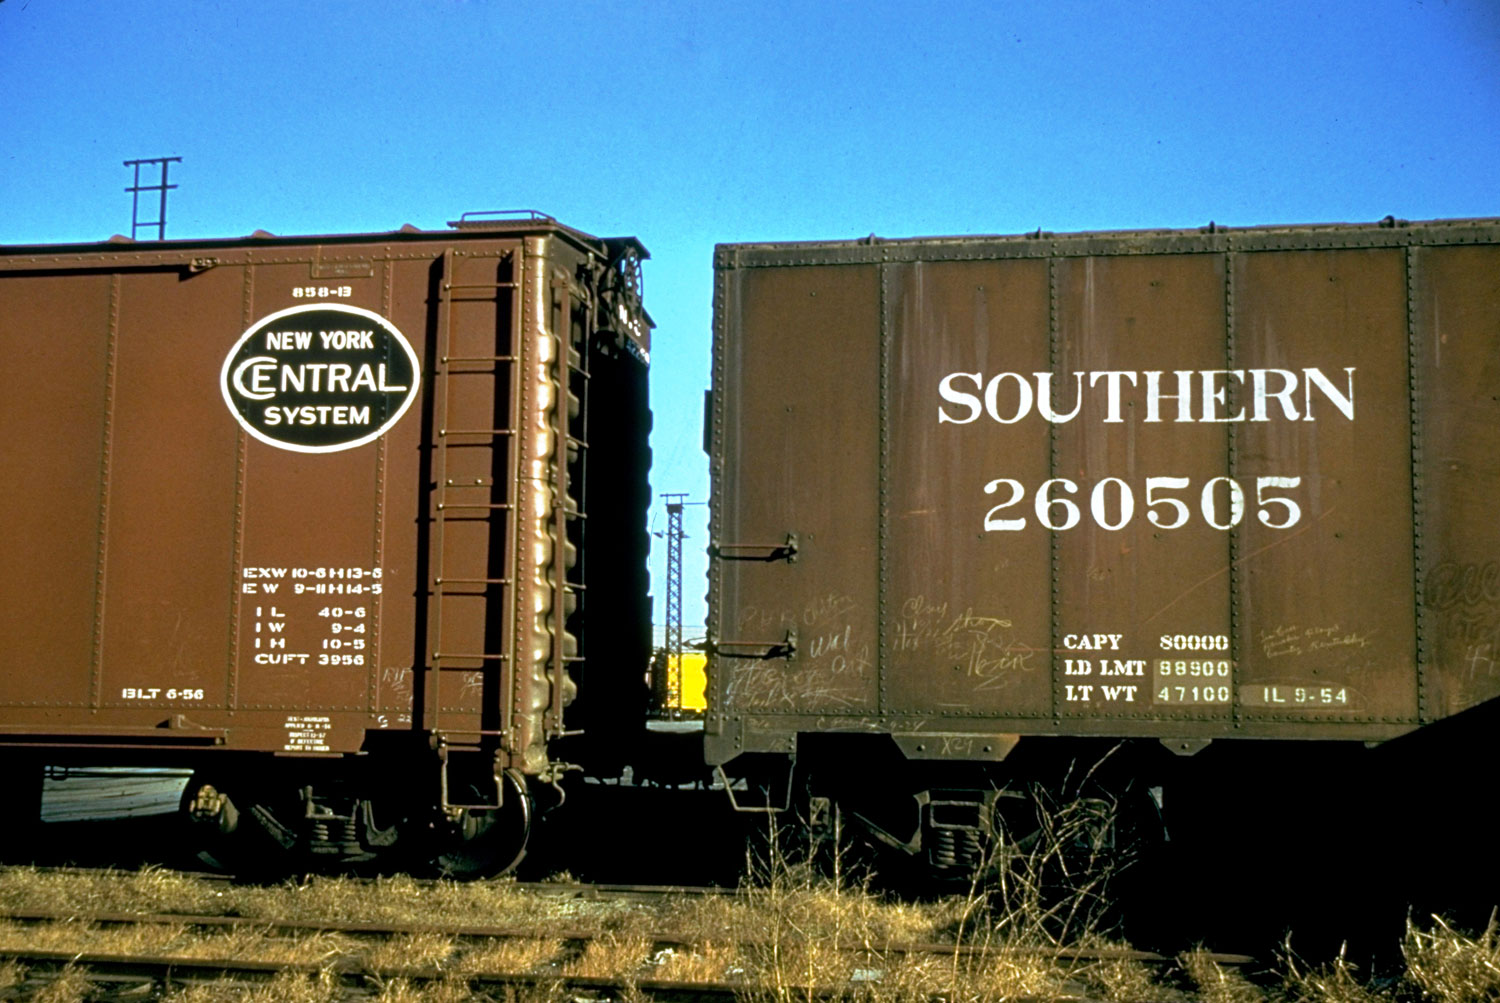 Walker Evans portrait of railroad freight cars, 1957.